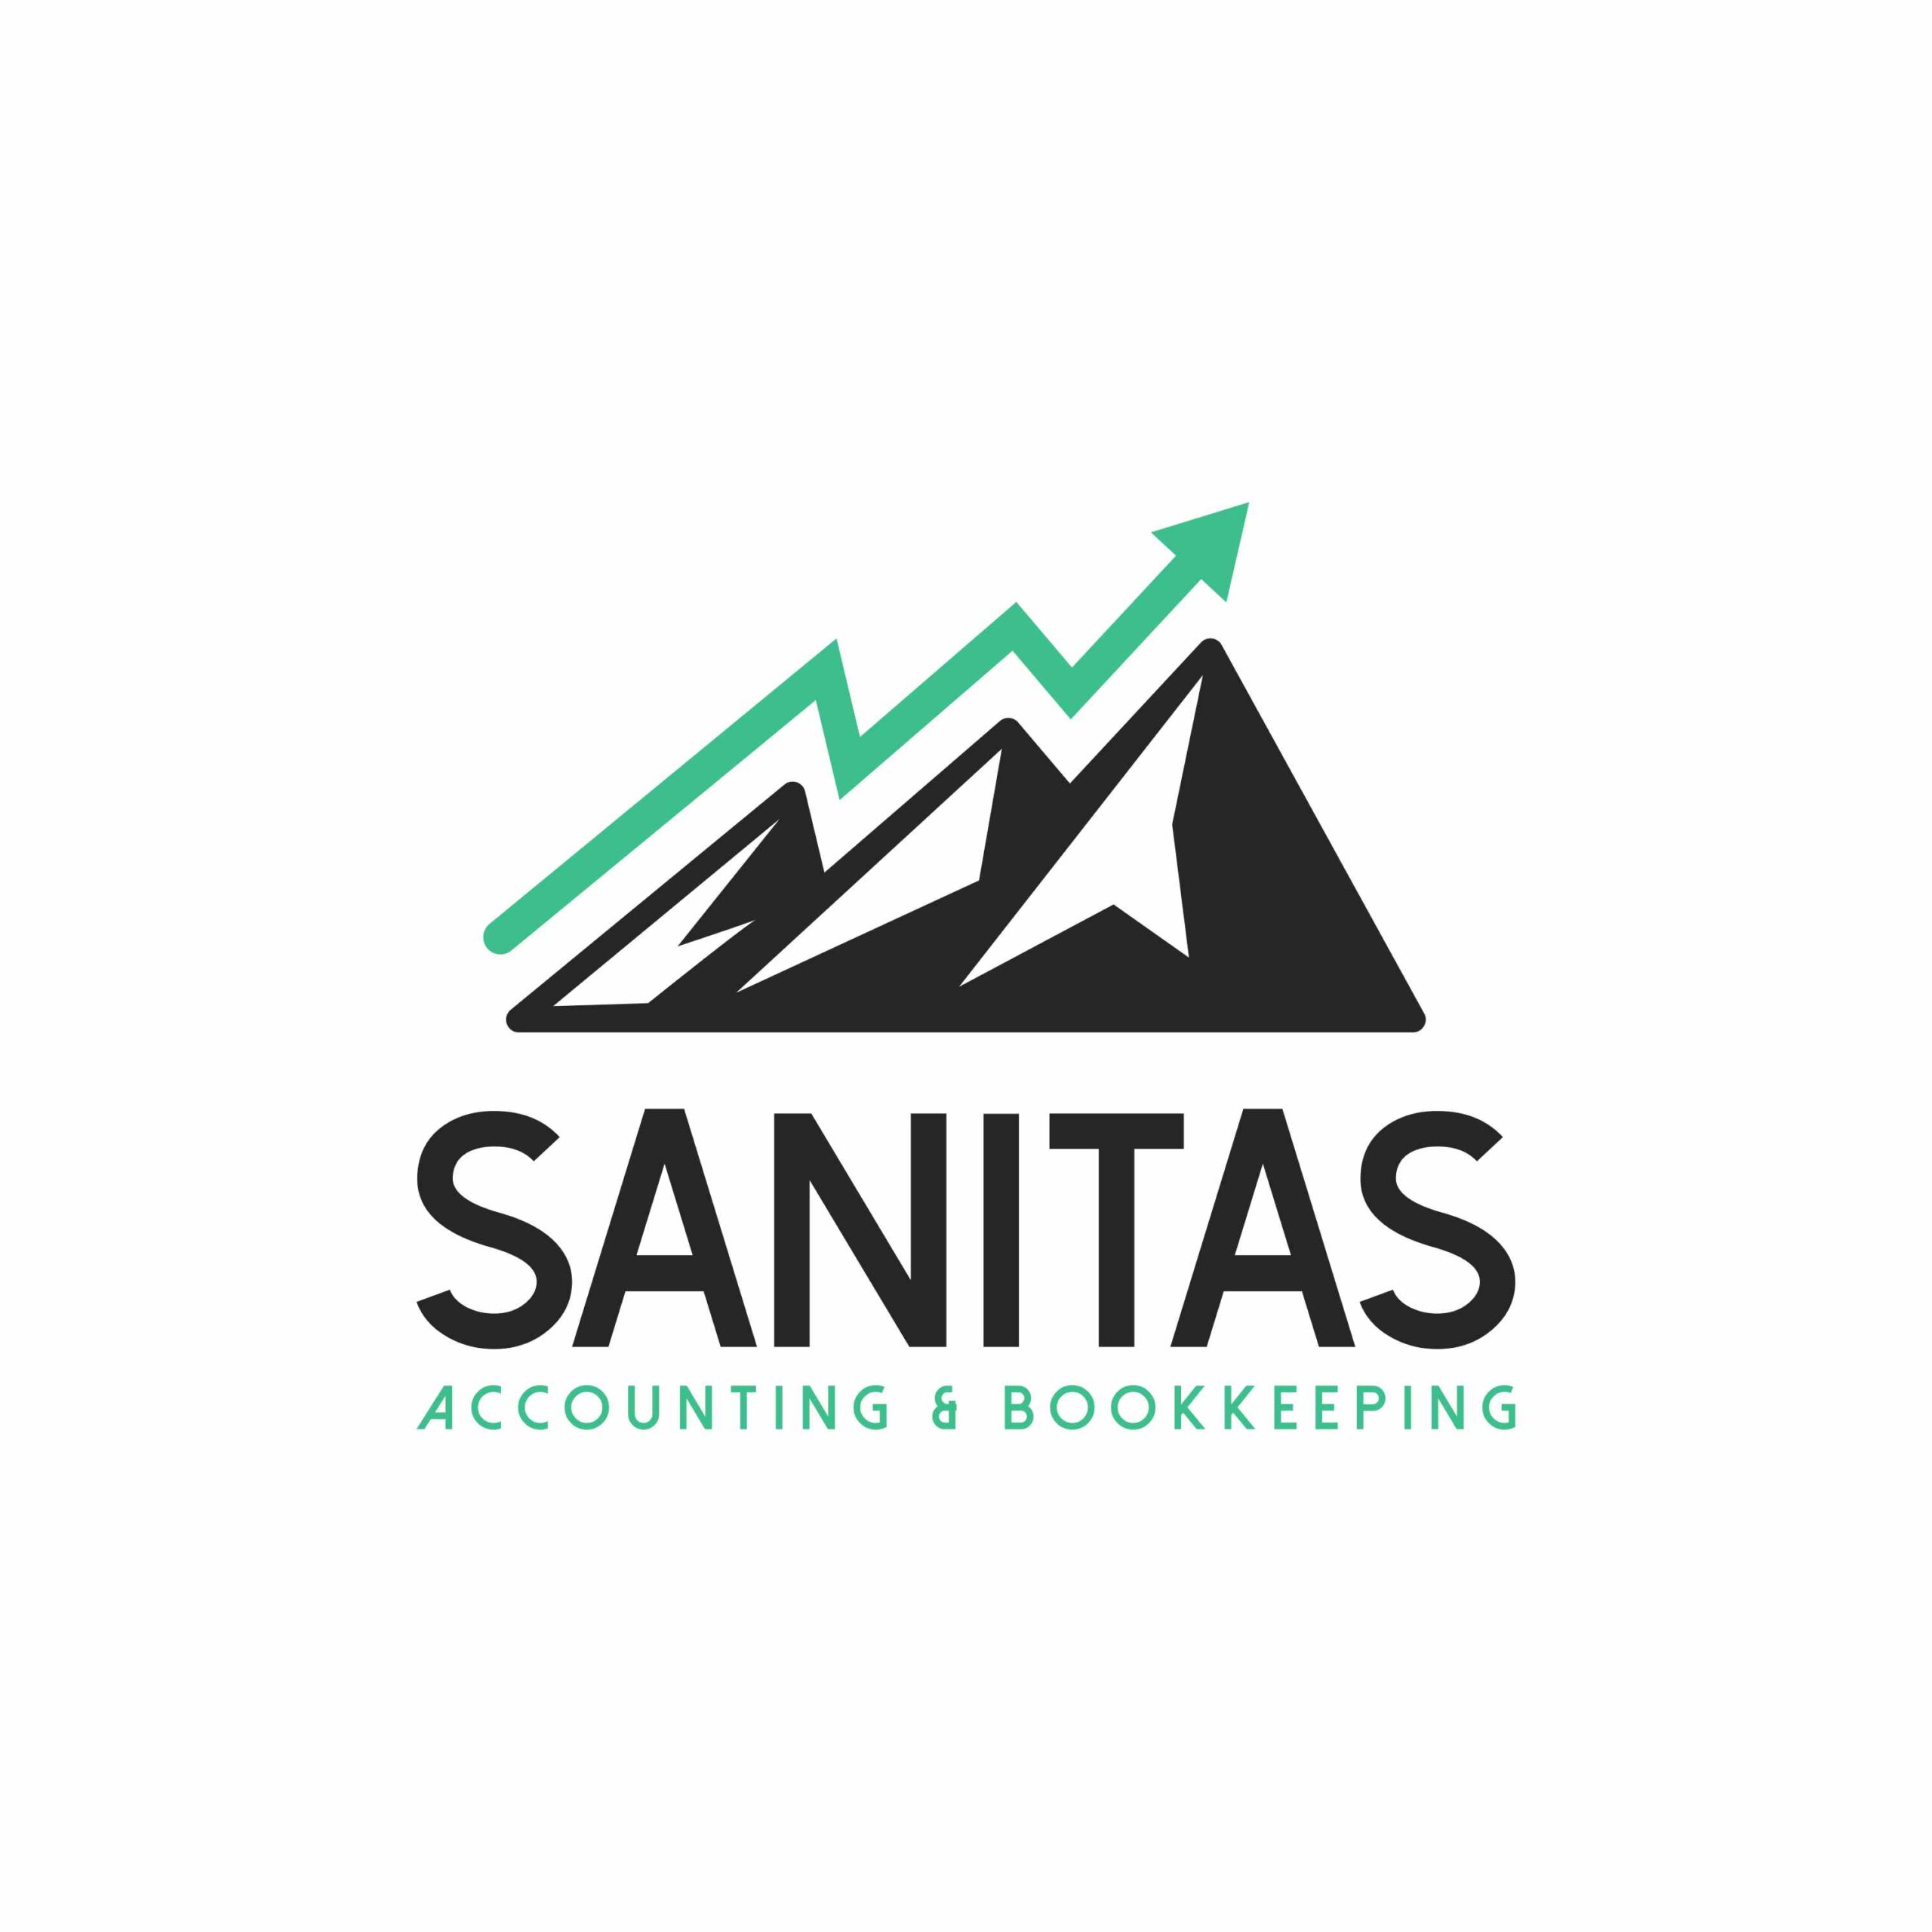 Hello world! Introducing Sanitas Accounting